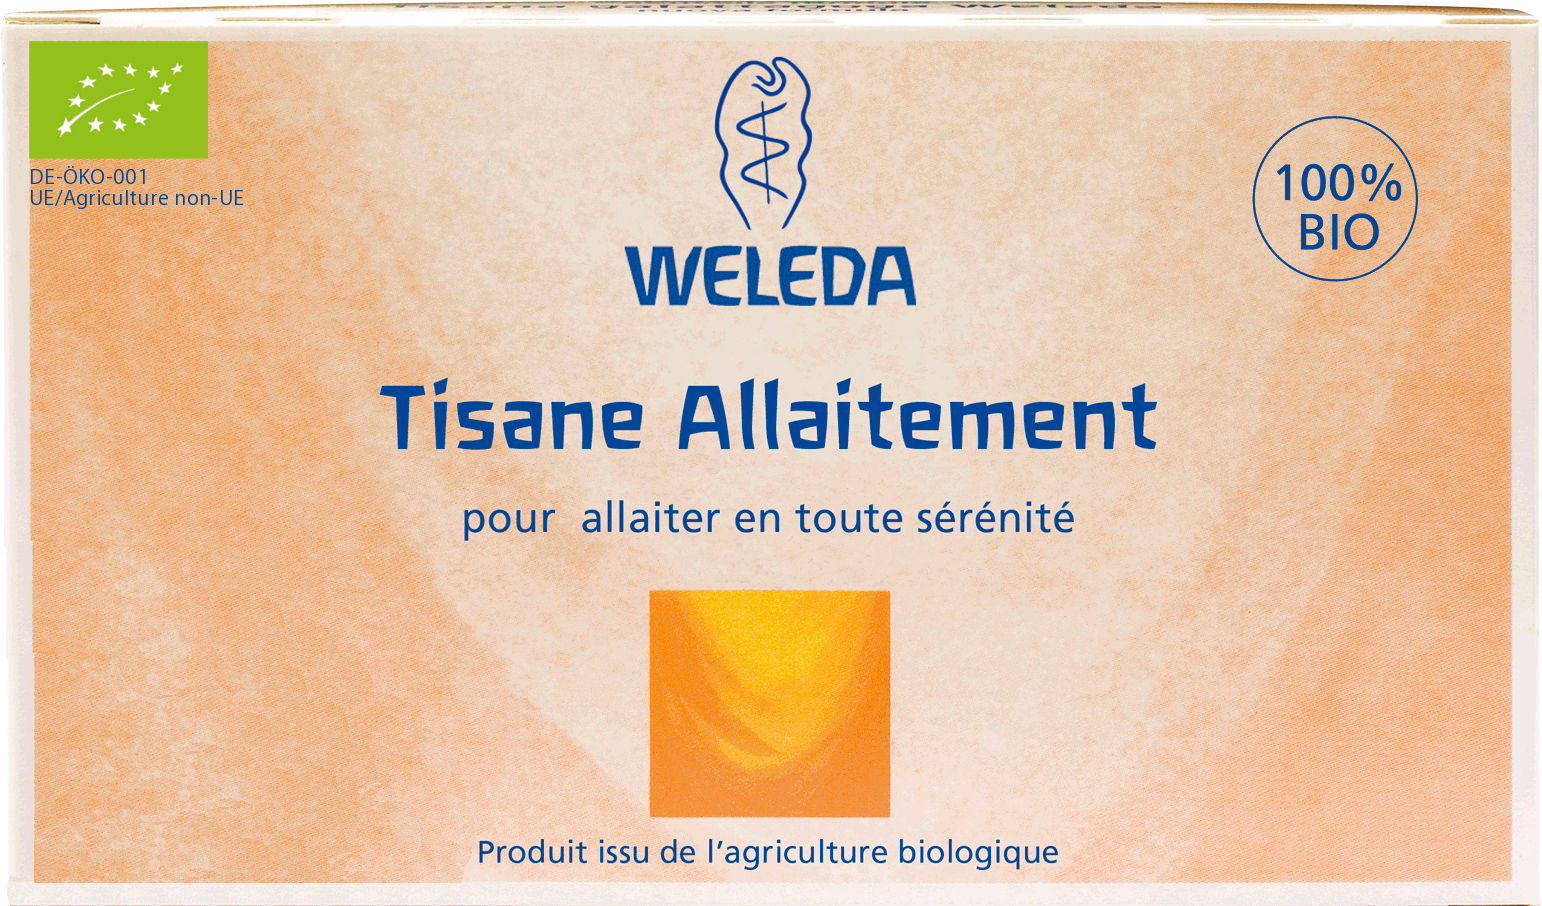 Doux Good - Weleda - Tisane allaitement